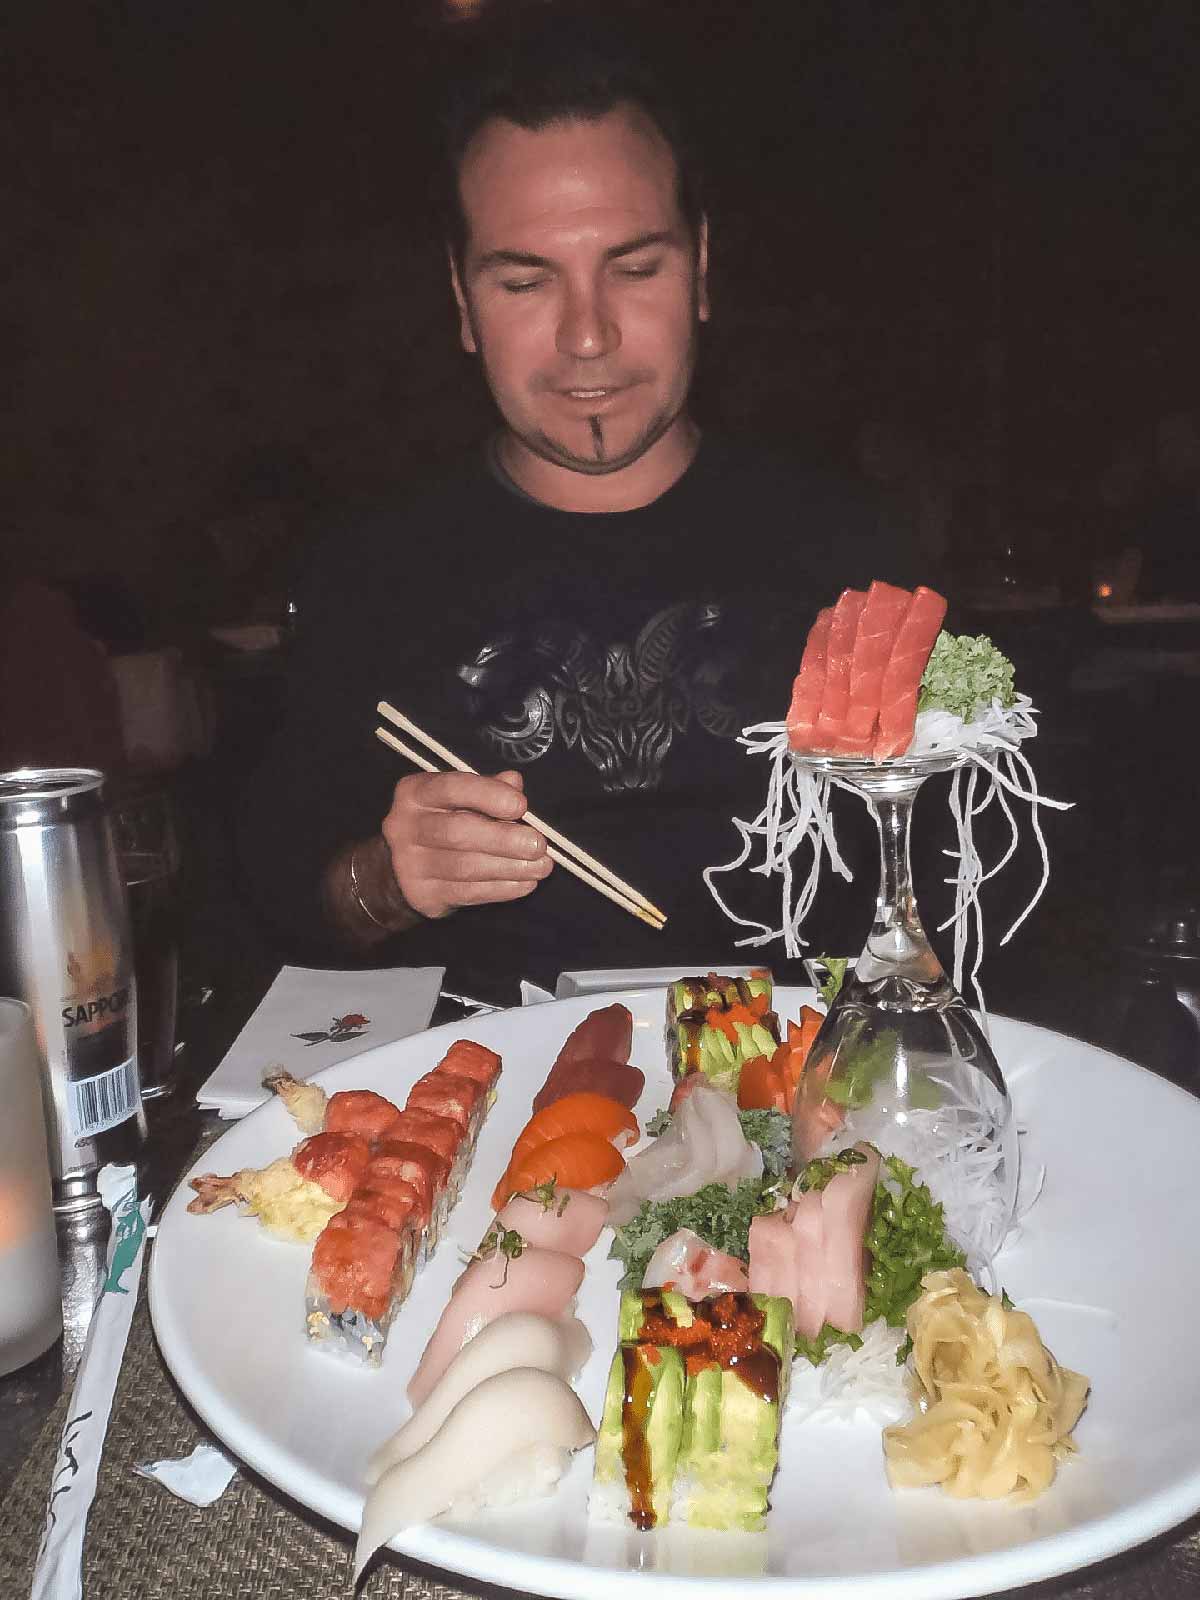 Brad eating a Japanese feast in Brooklyn